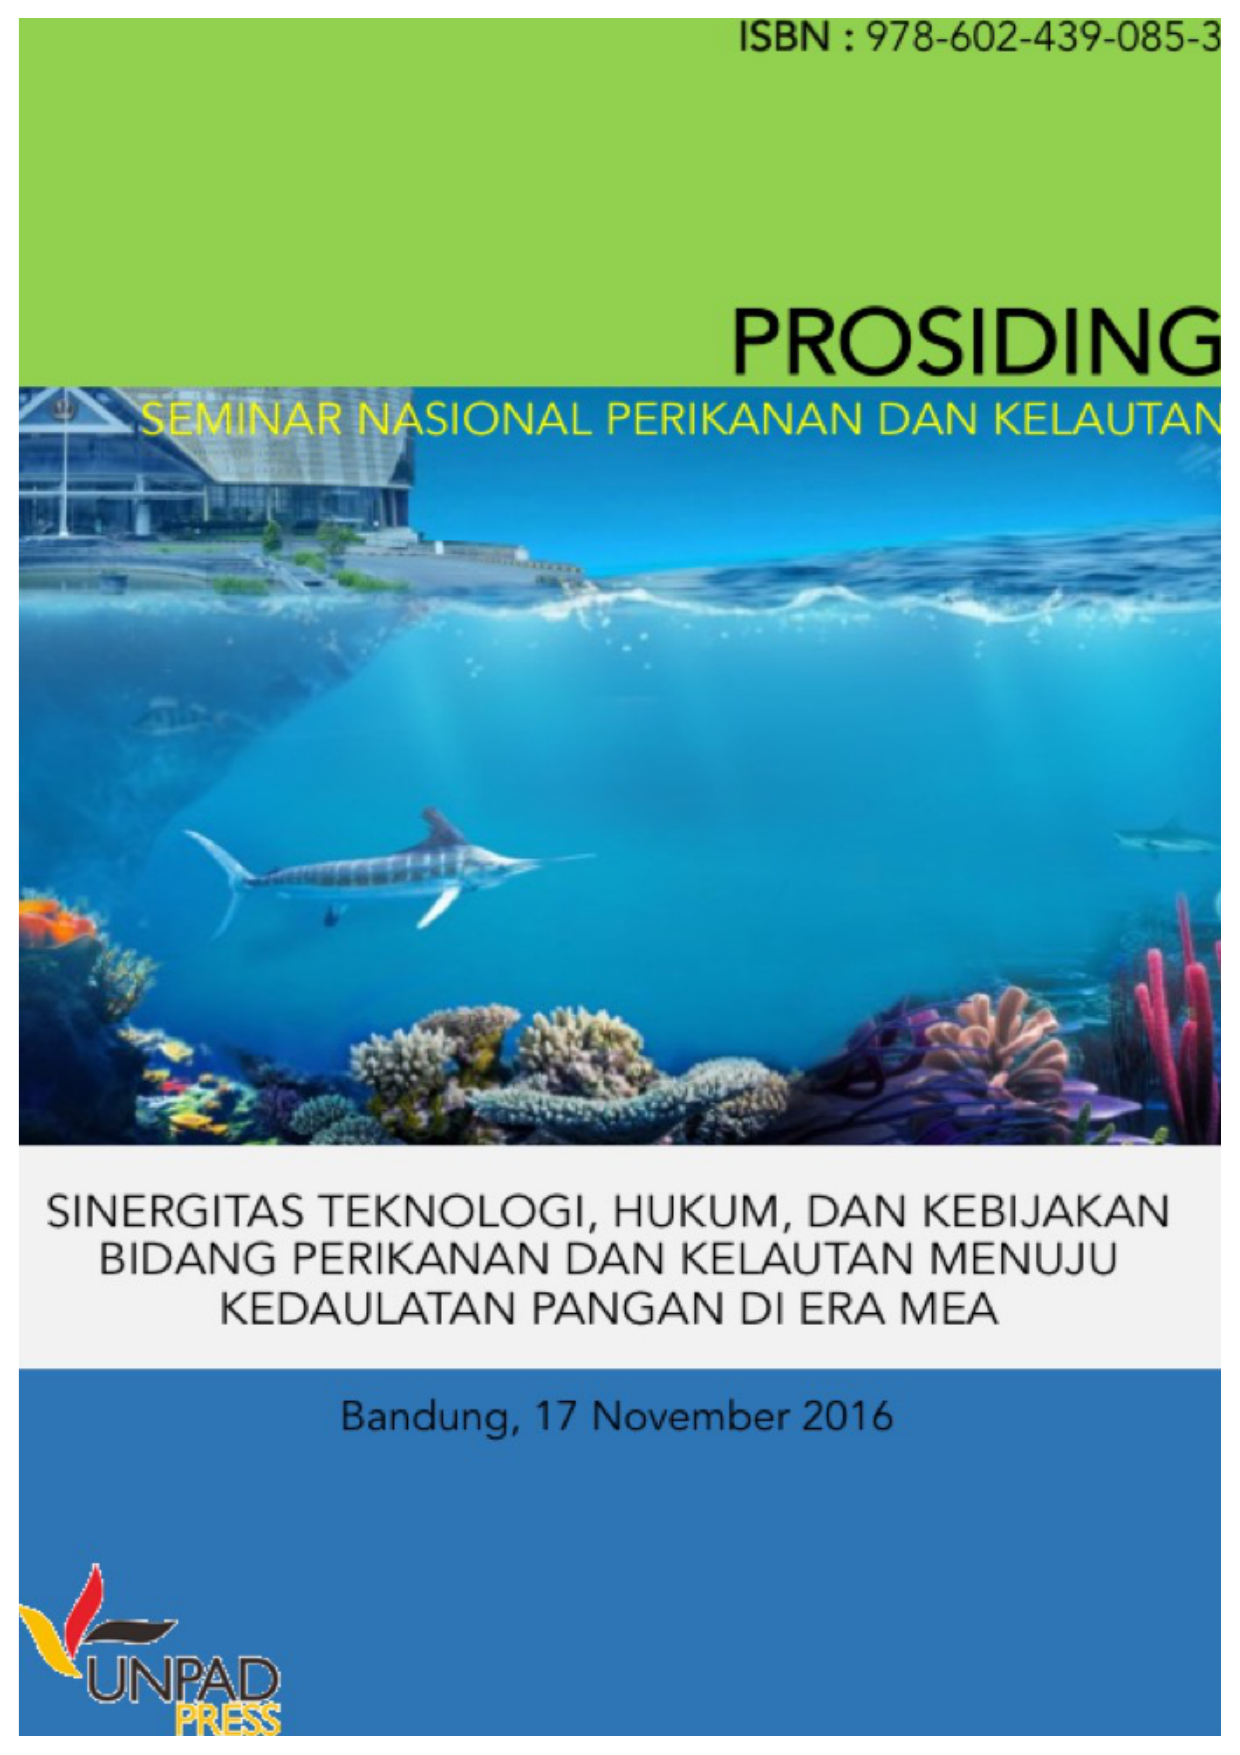 ProsidingSeminarNasionalPerikanandanKelautan Bandung 17November2016 Prosiding Seminar Nasional Perikanan dan Kelautan SINERGITAS TEKNOLOGI HUKUM